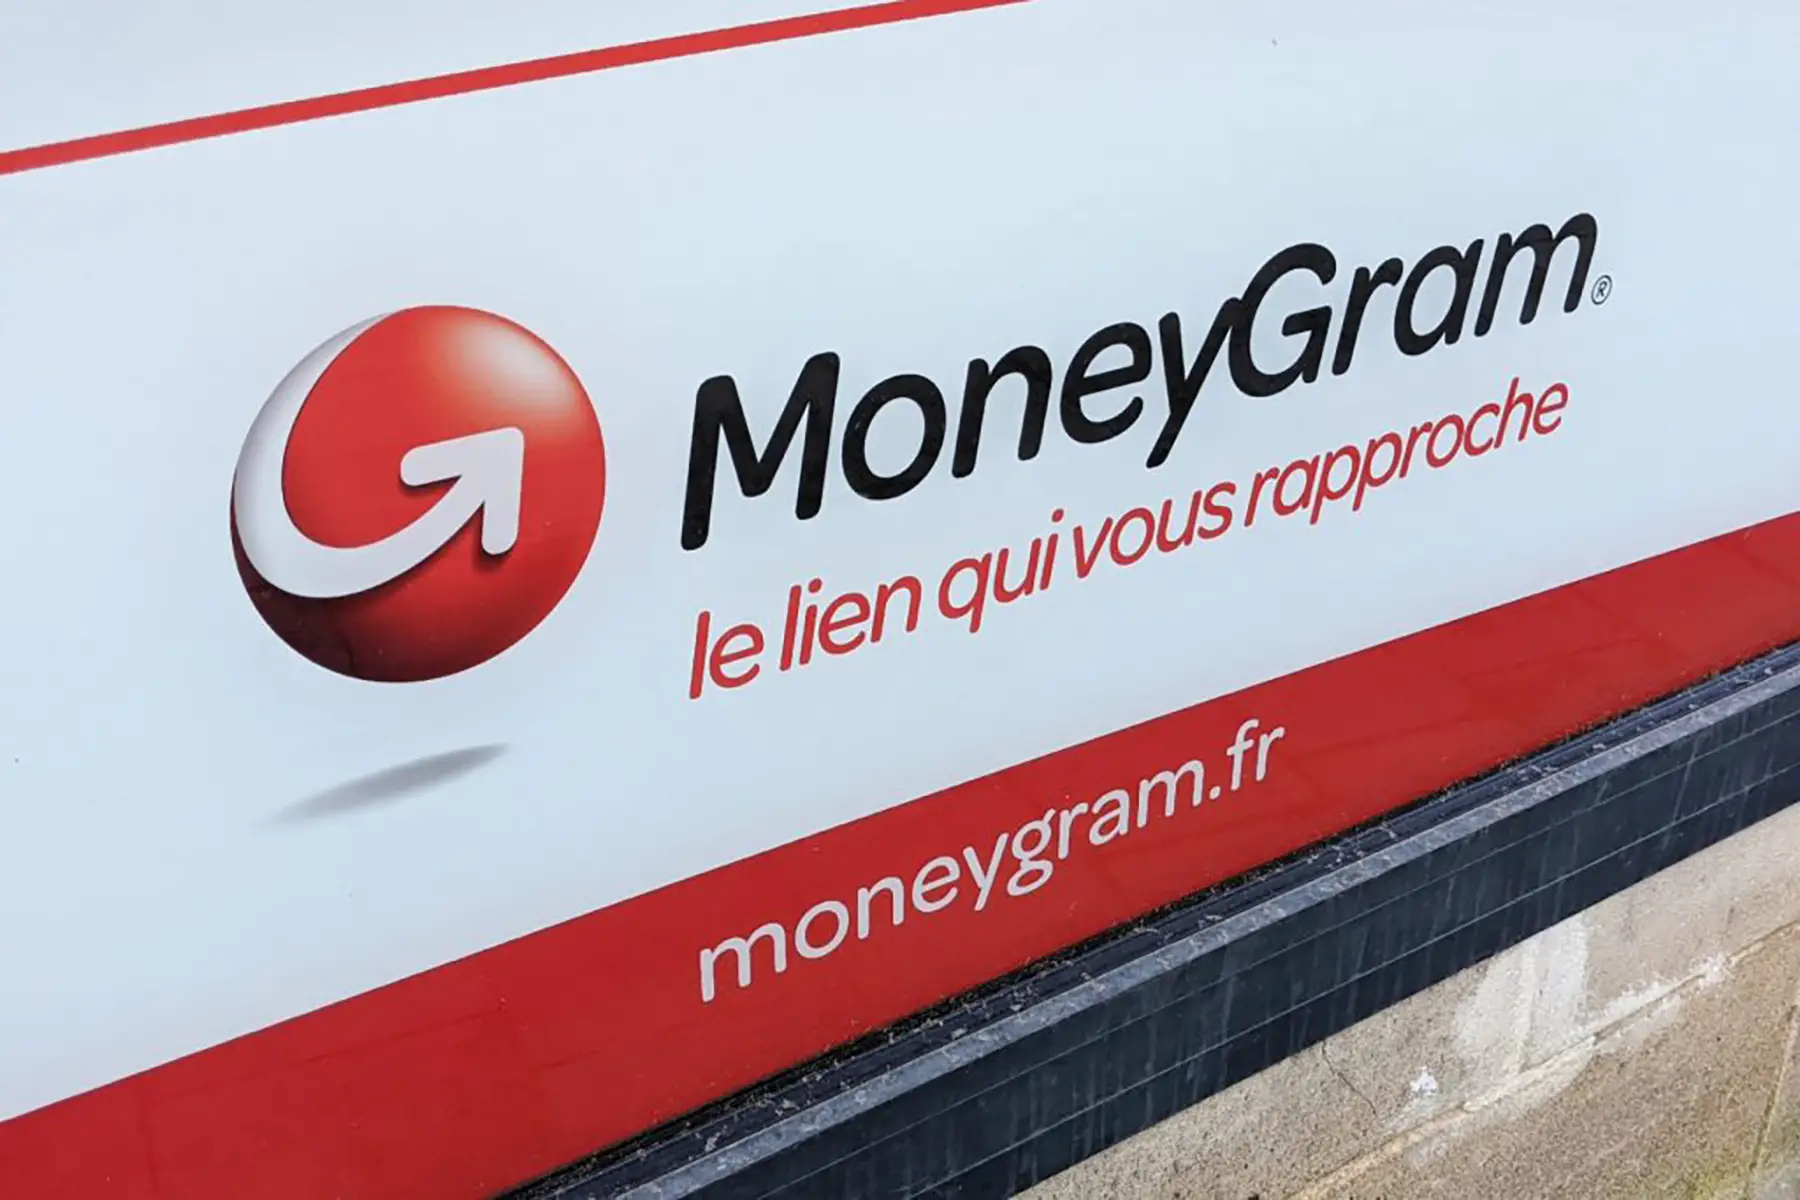 wire transfers in France: the MoneyGram logo